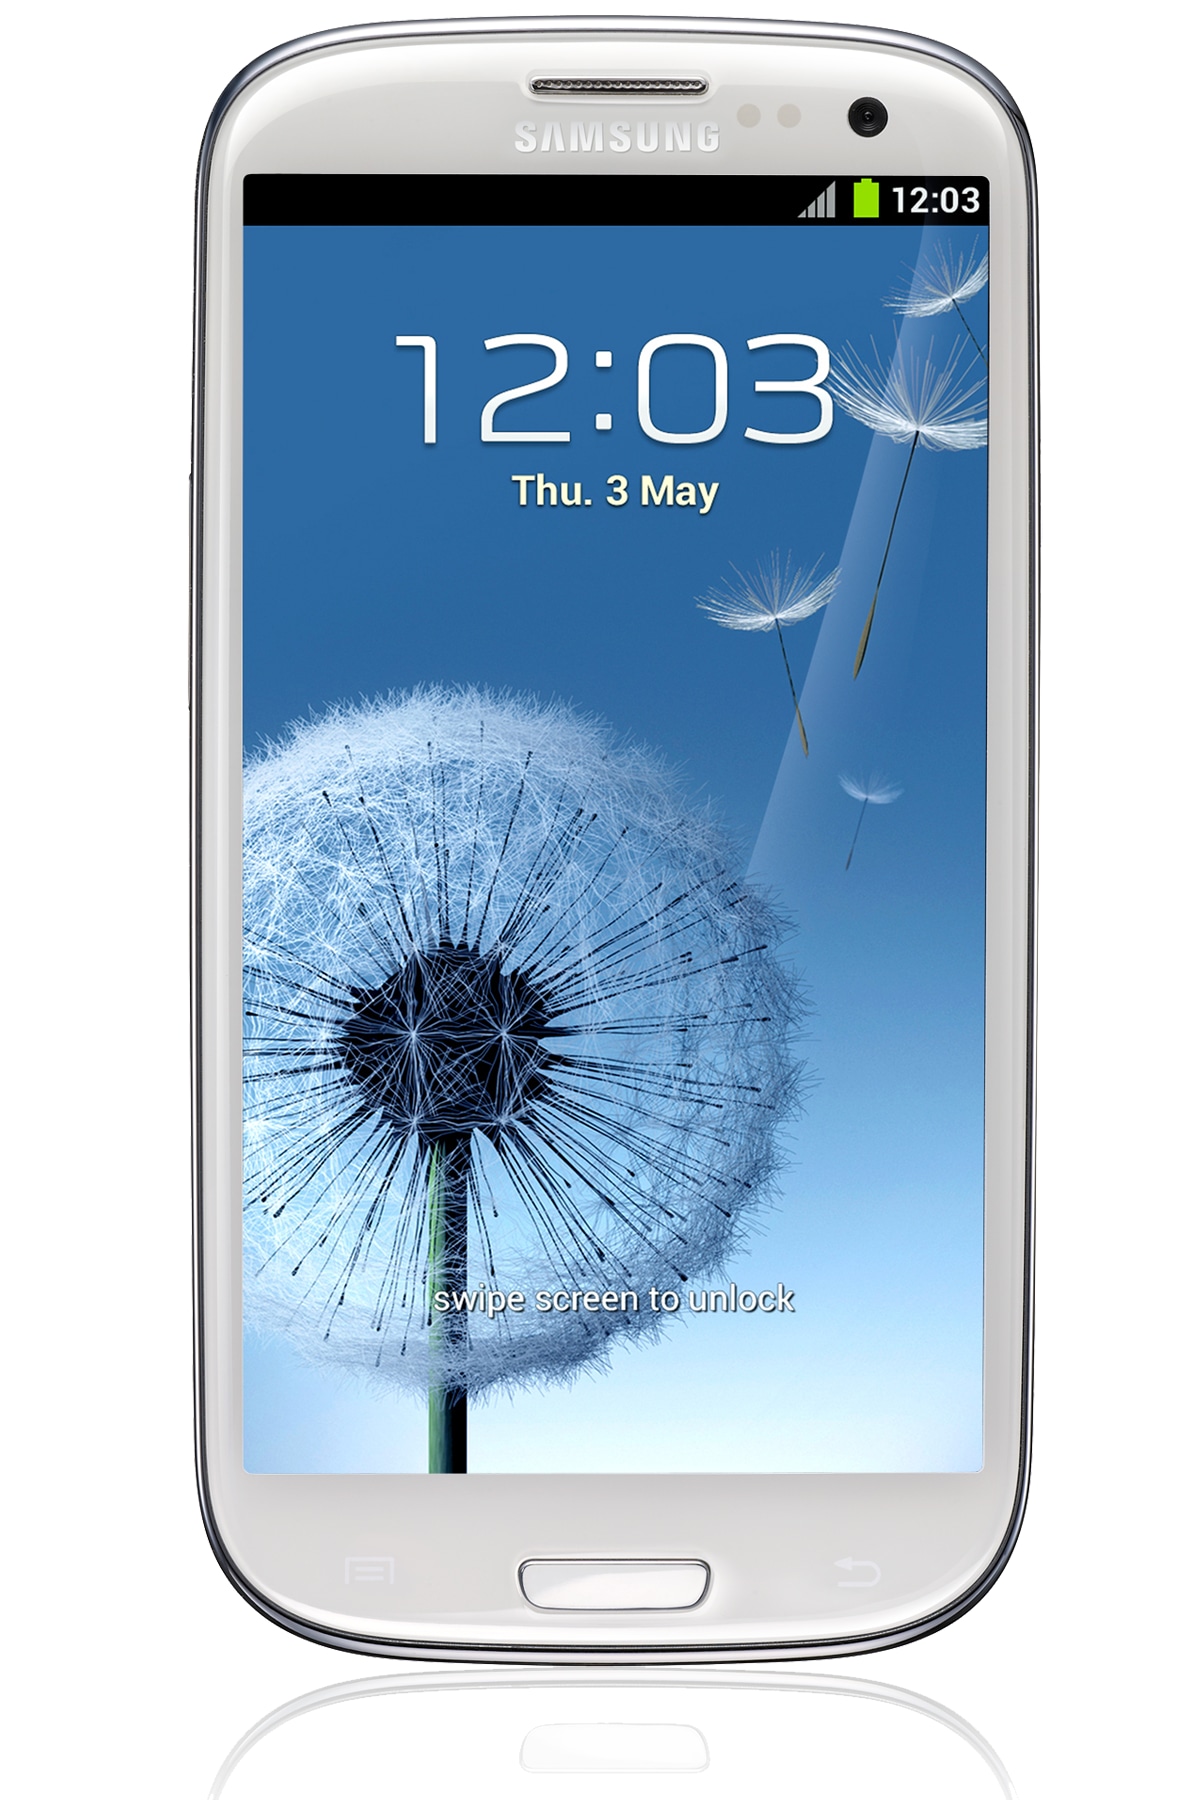 Samsung Galaxy S III (S3) 4G LTE - 8MP 